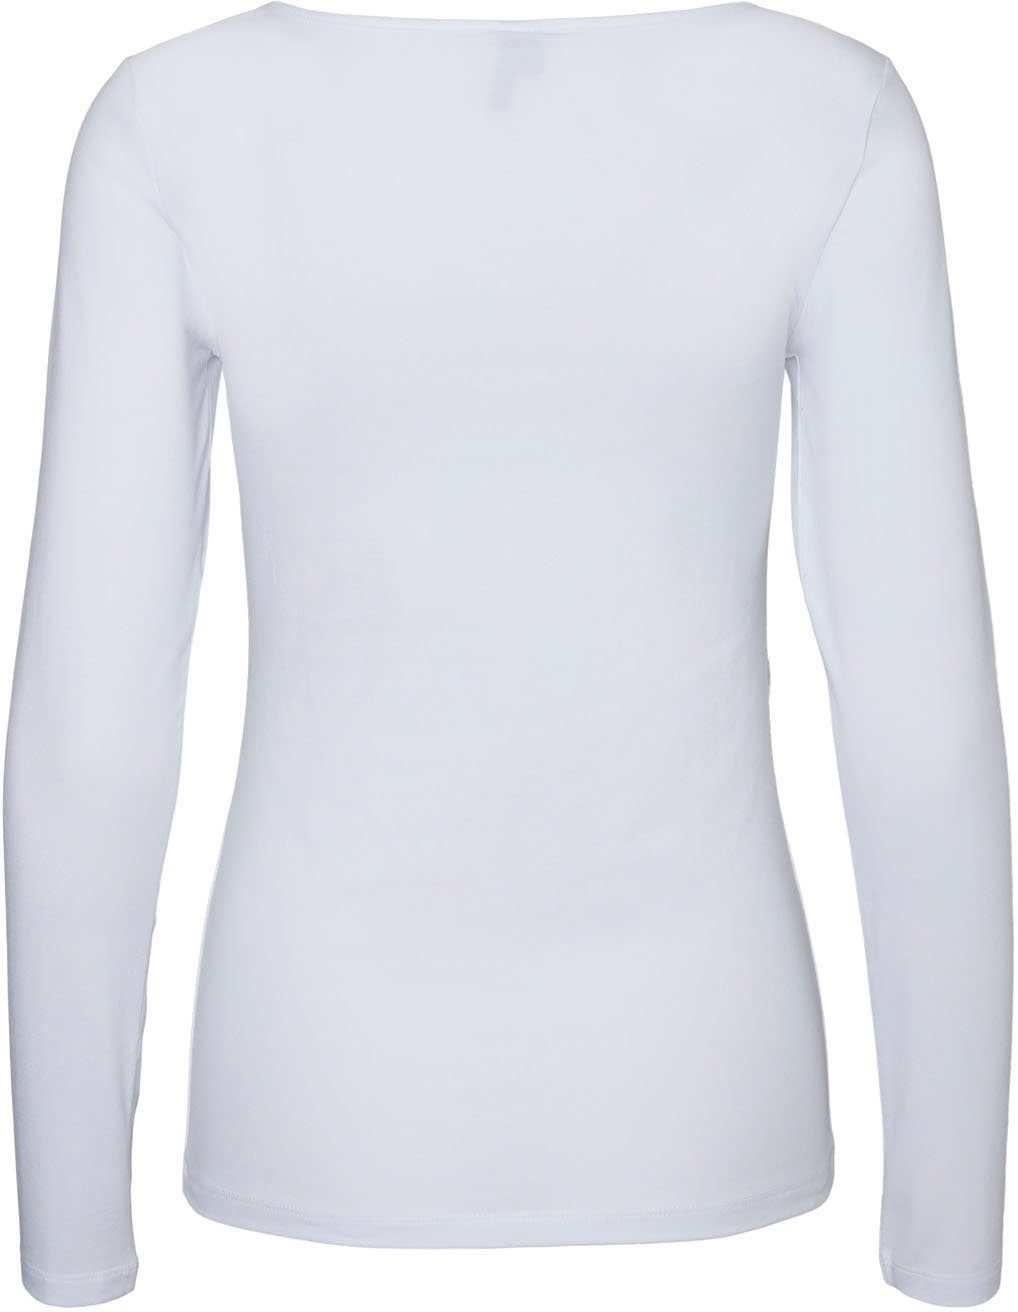 Vero Moda Langarmshirt VMMAXI aus white Bio-Baumwolle bright